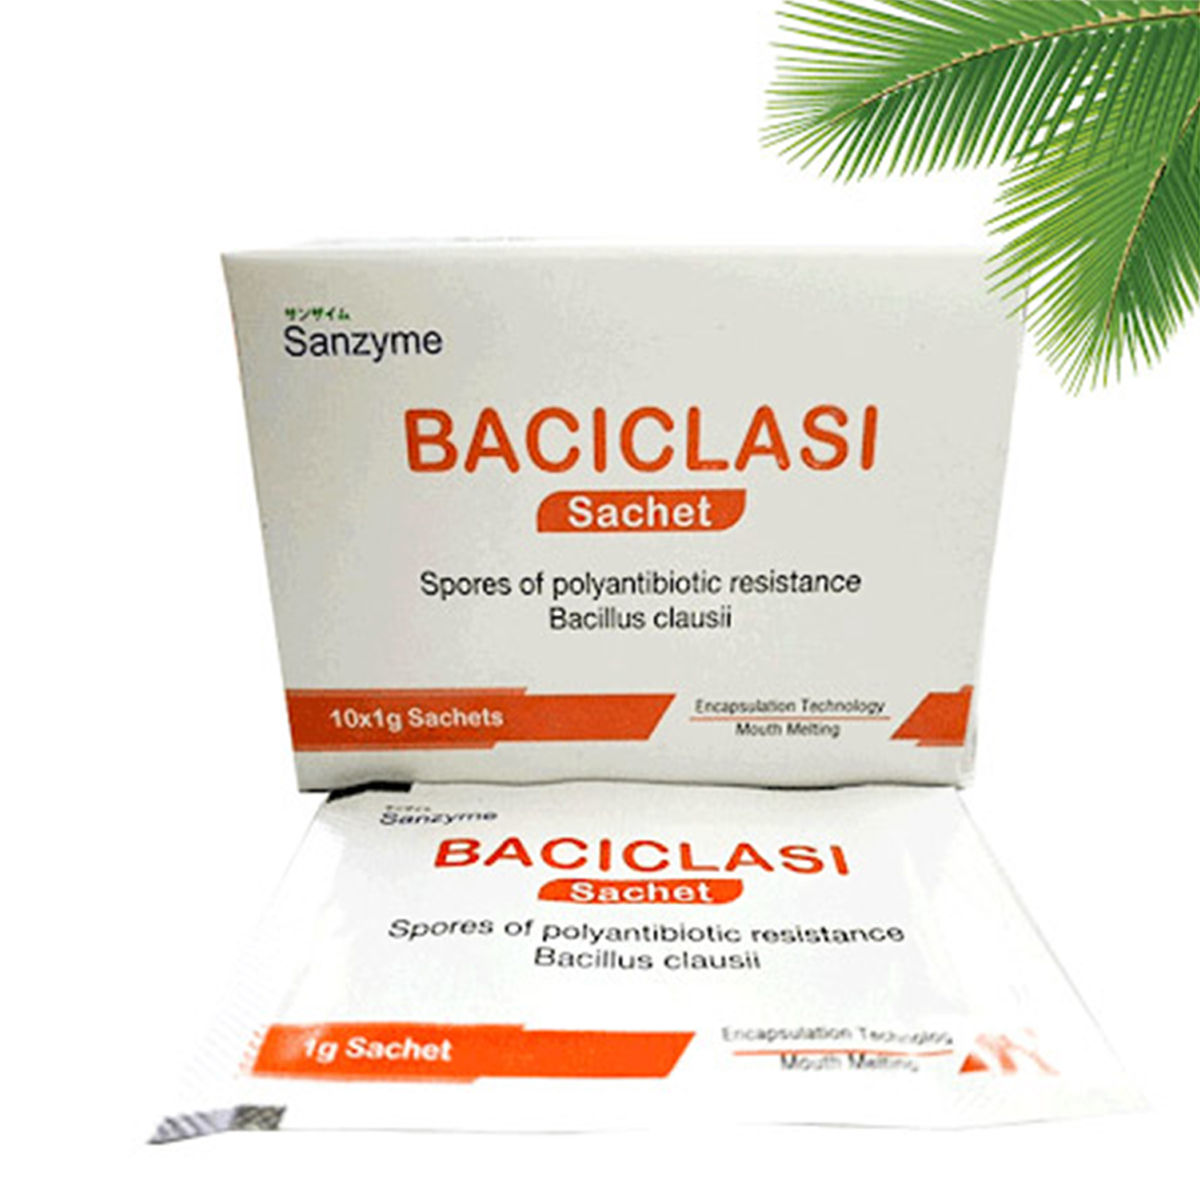 Buy Baciclasi Sachet 1 gm Online